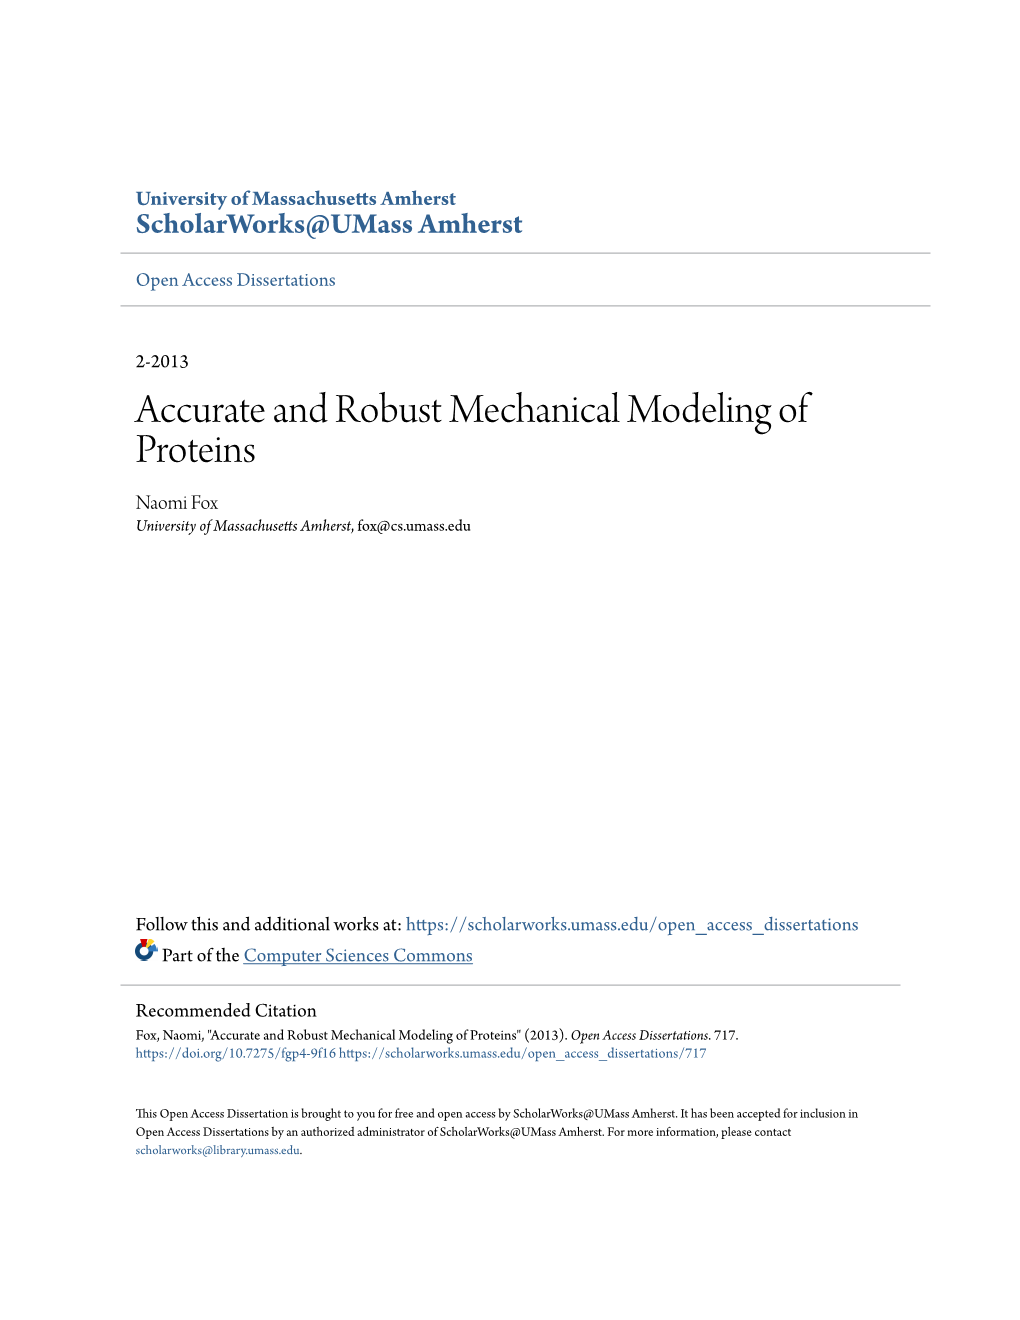 Accurate and Robust Mechanical Modeling of Proteins Naomi Fox University of Massachusetts Amherst, Fox@Cs.Umass.Edu